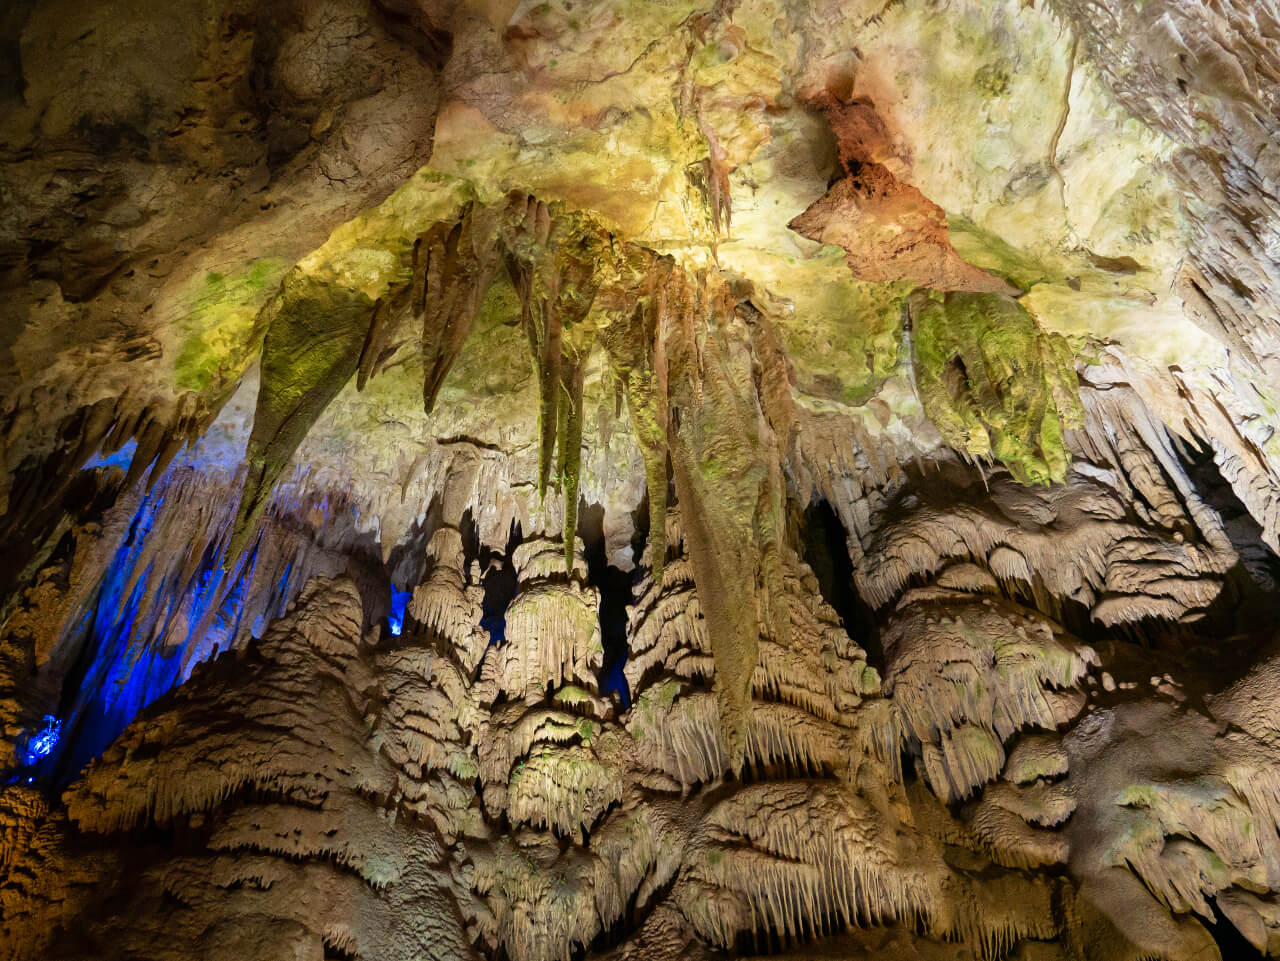 Sufit Jaskini Prometeusza z stalaktytami